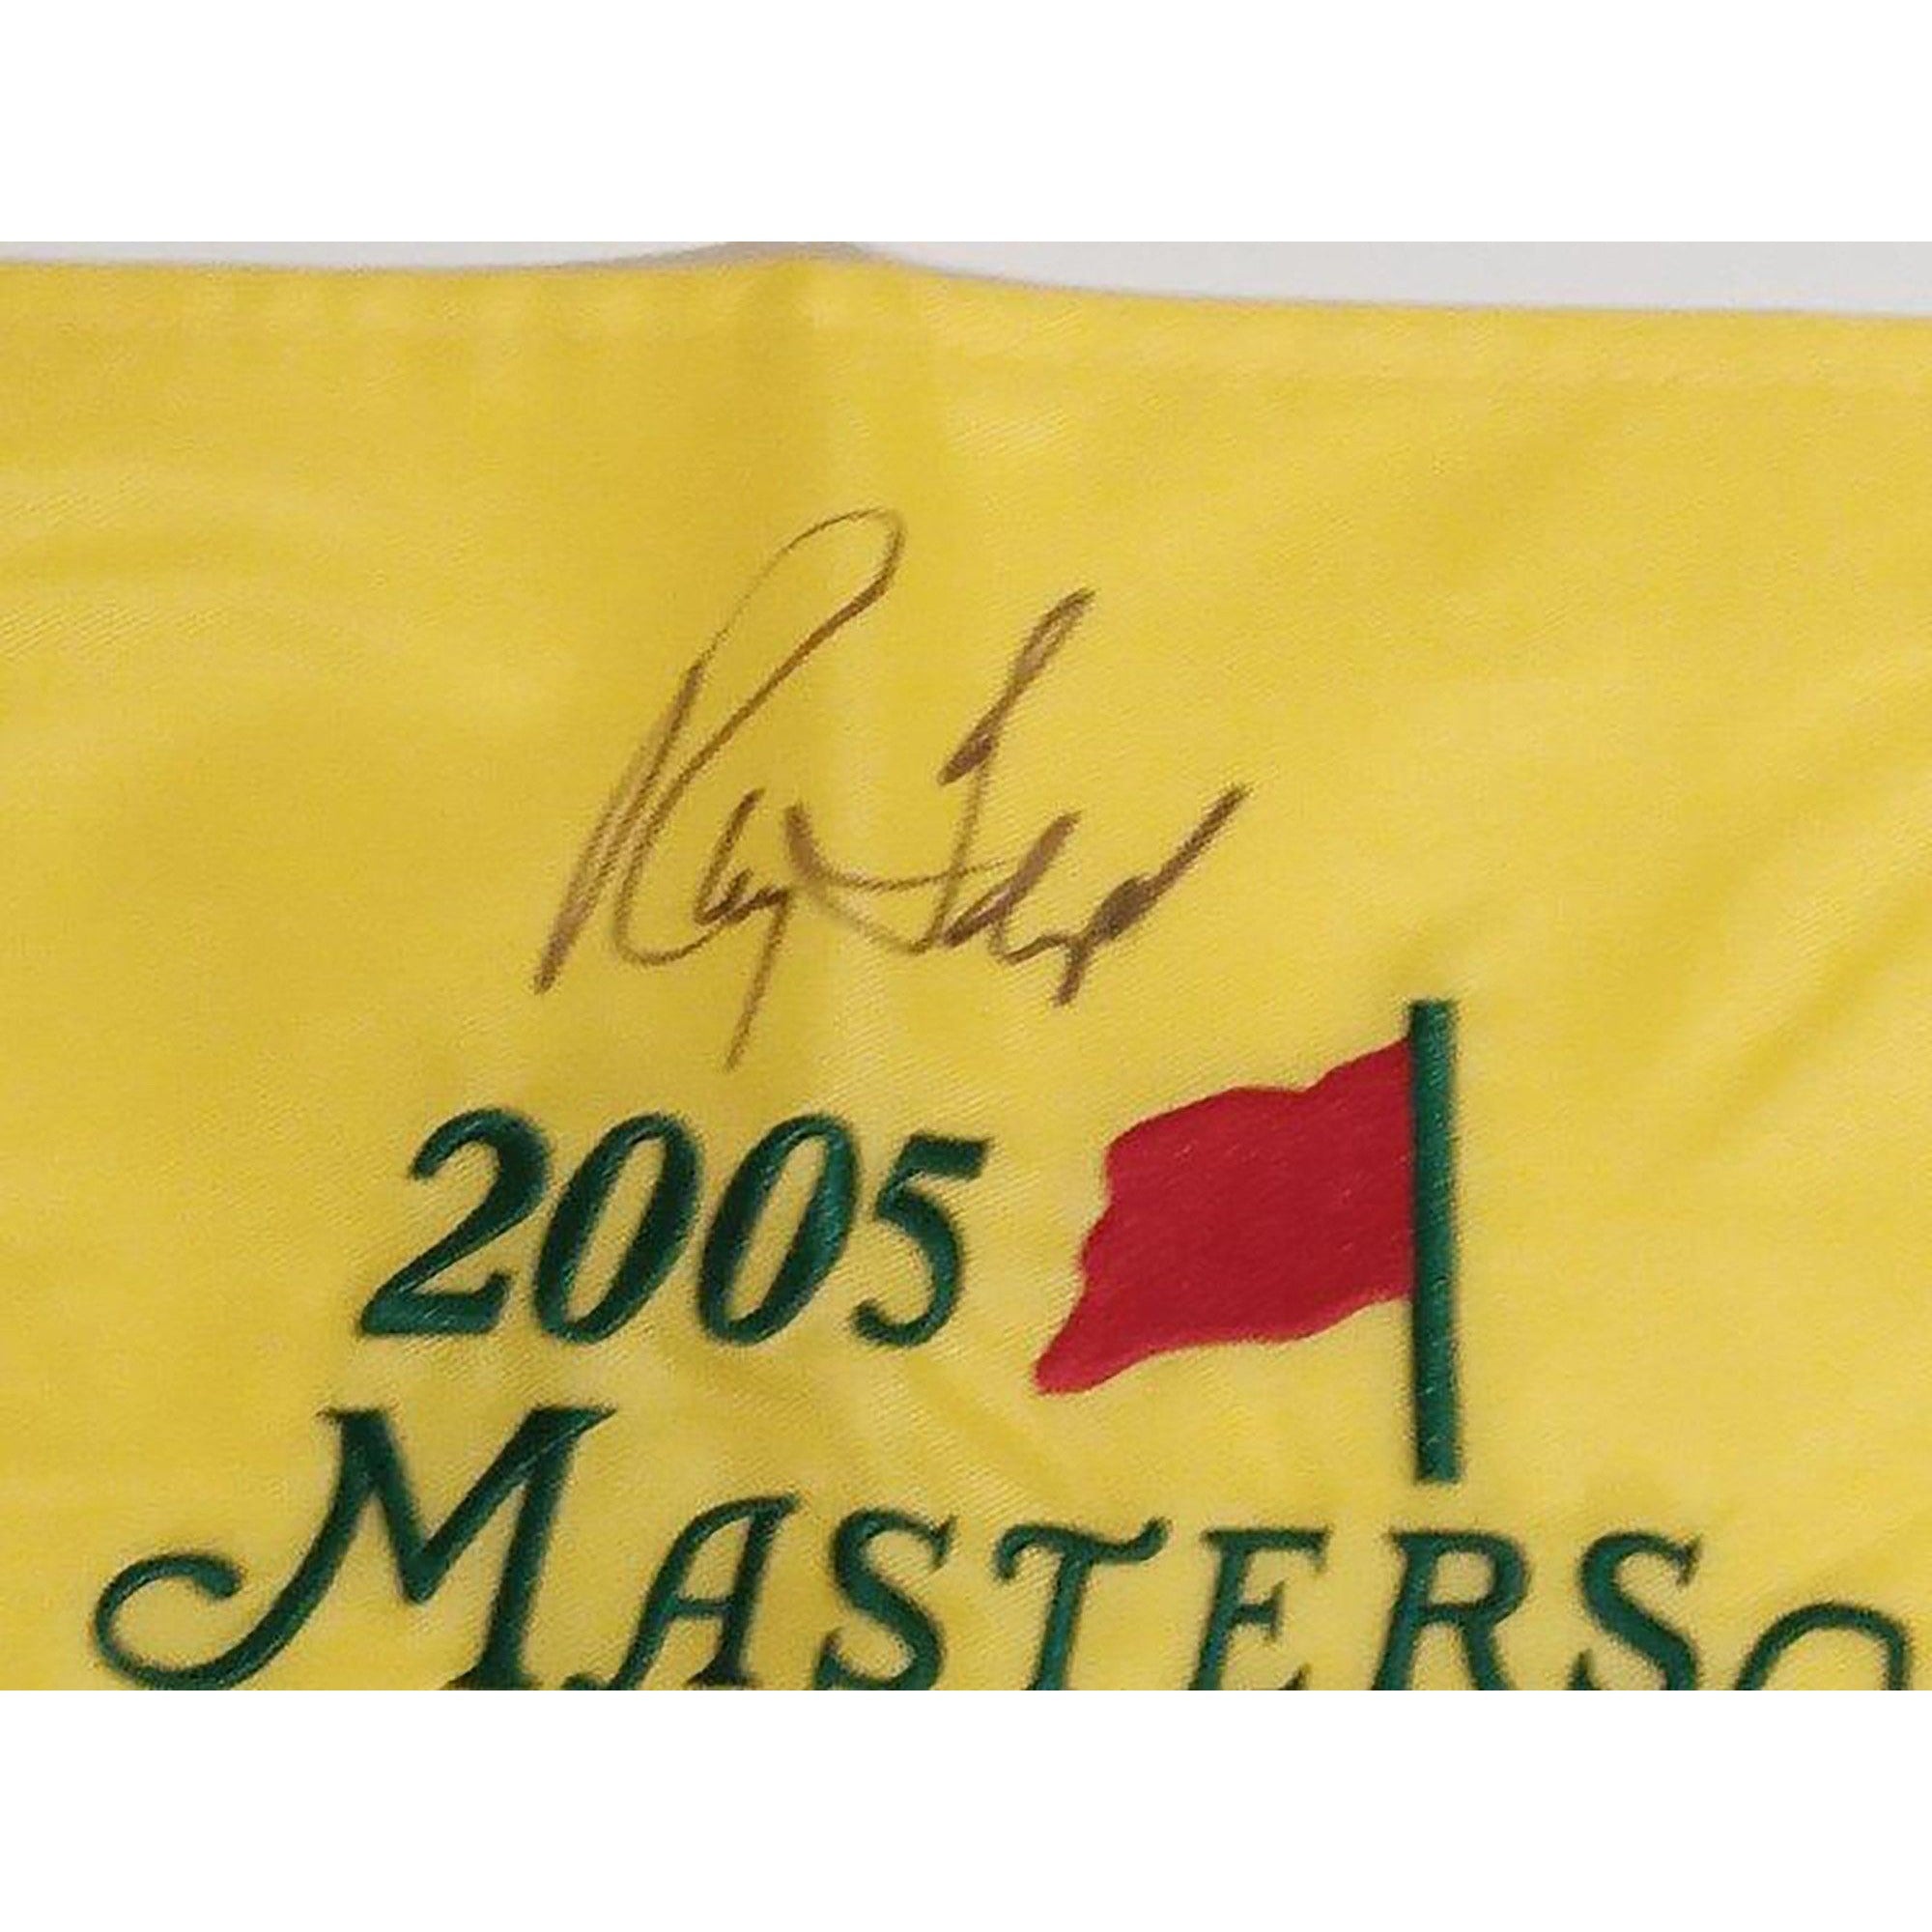 Raymond Floyd Masters flag signed with Ernie Els